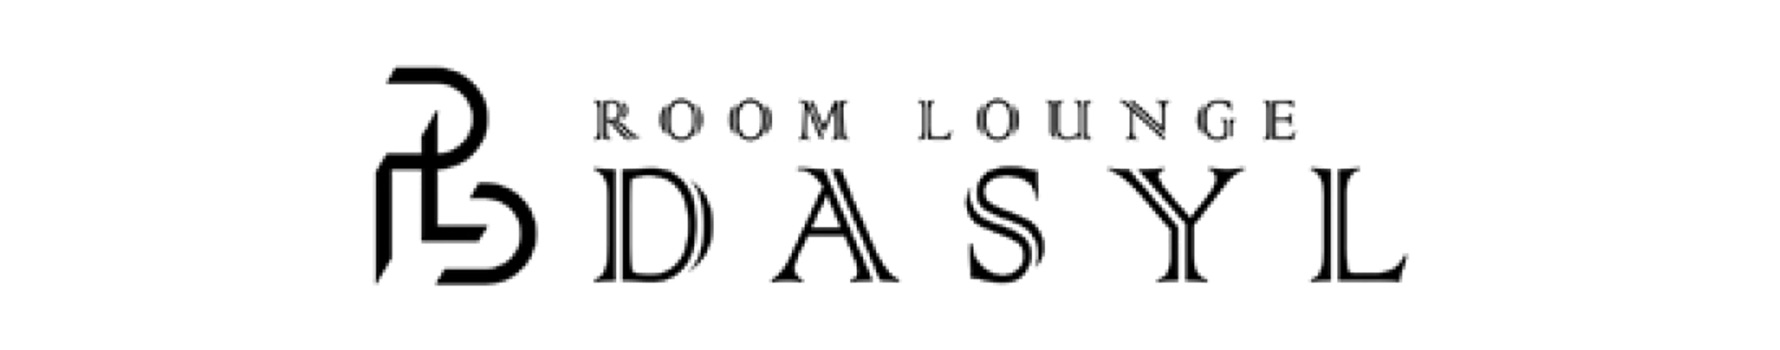 ROOM LOUNGE DASYL【ダジール】(六本木)のロゴ